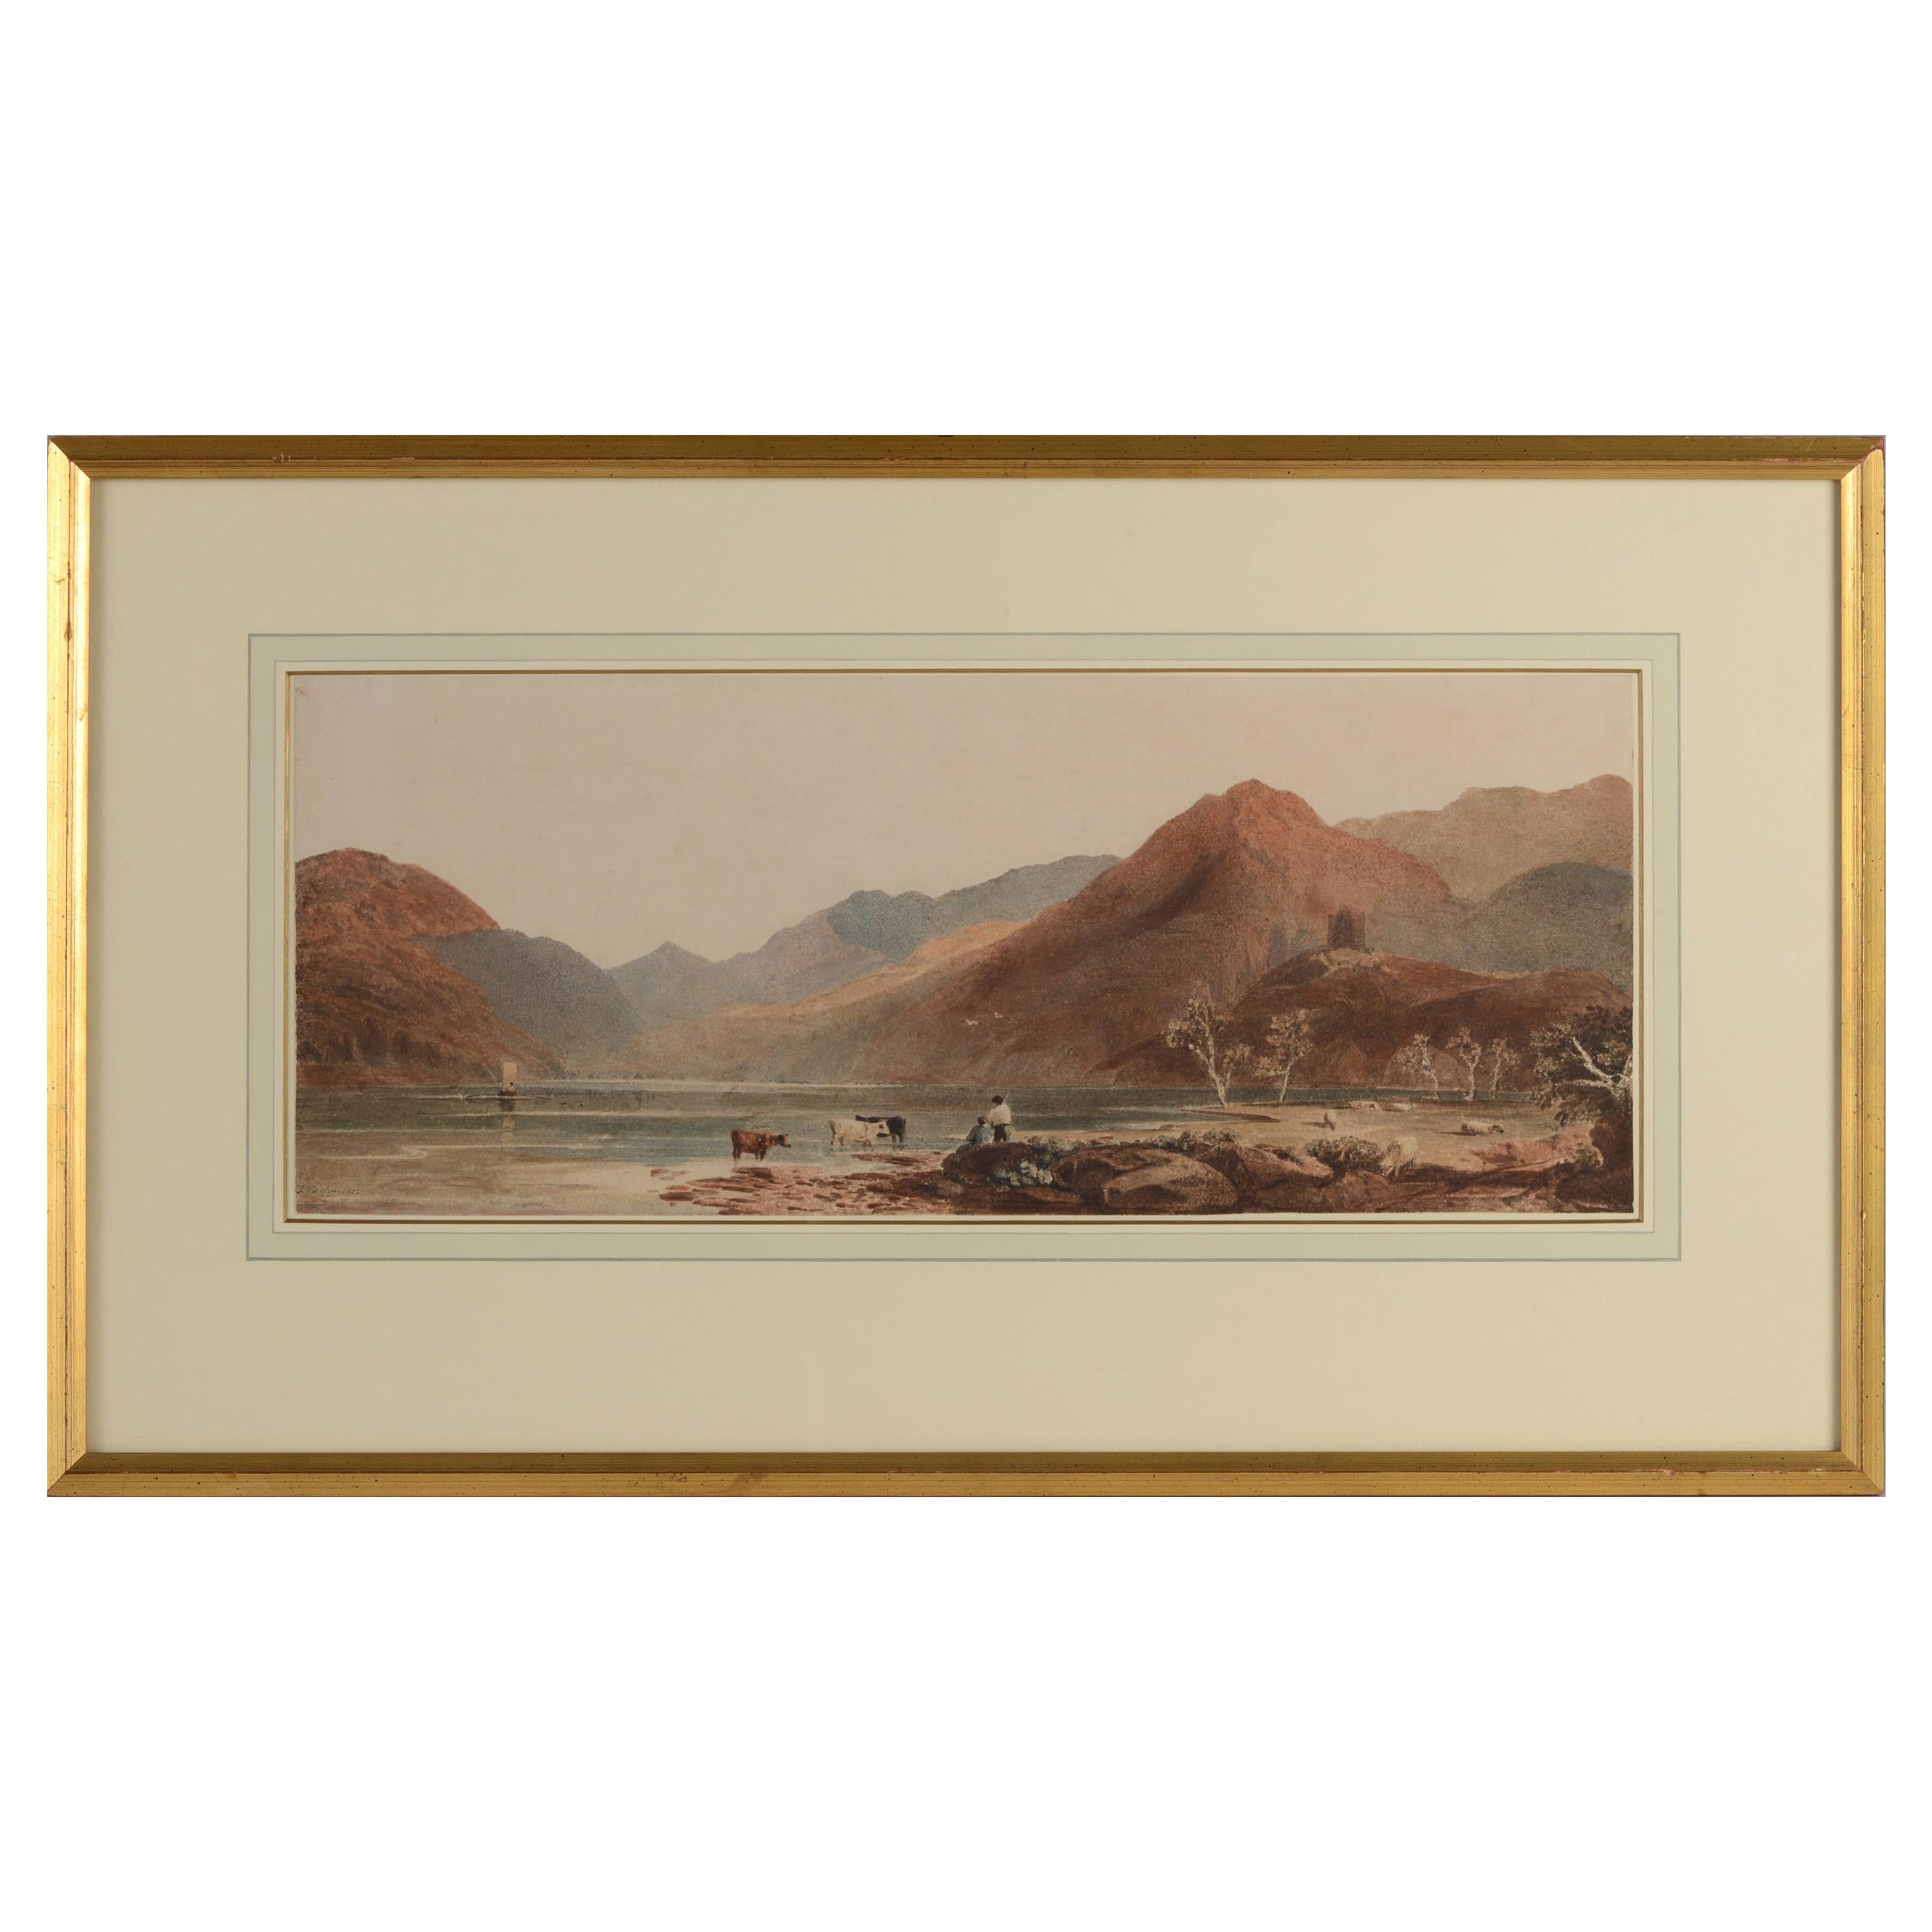 Watercolor by John Varley, 1812